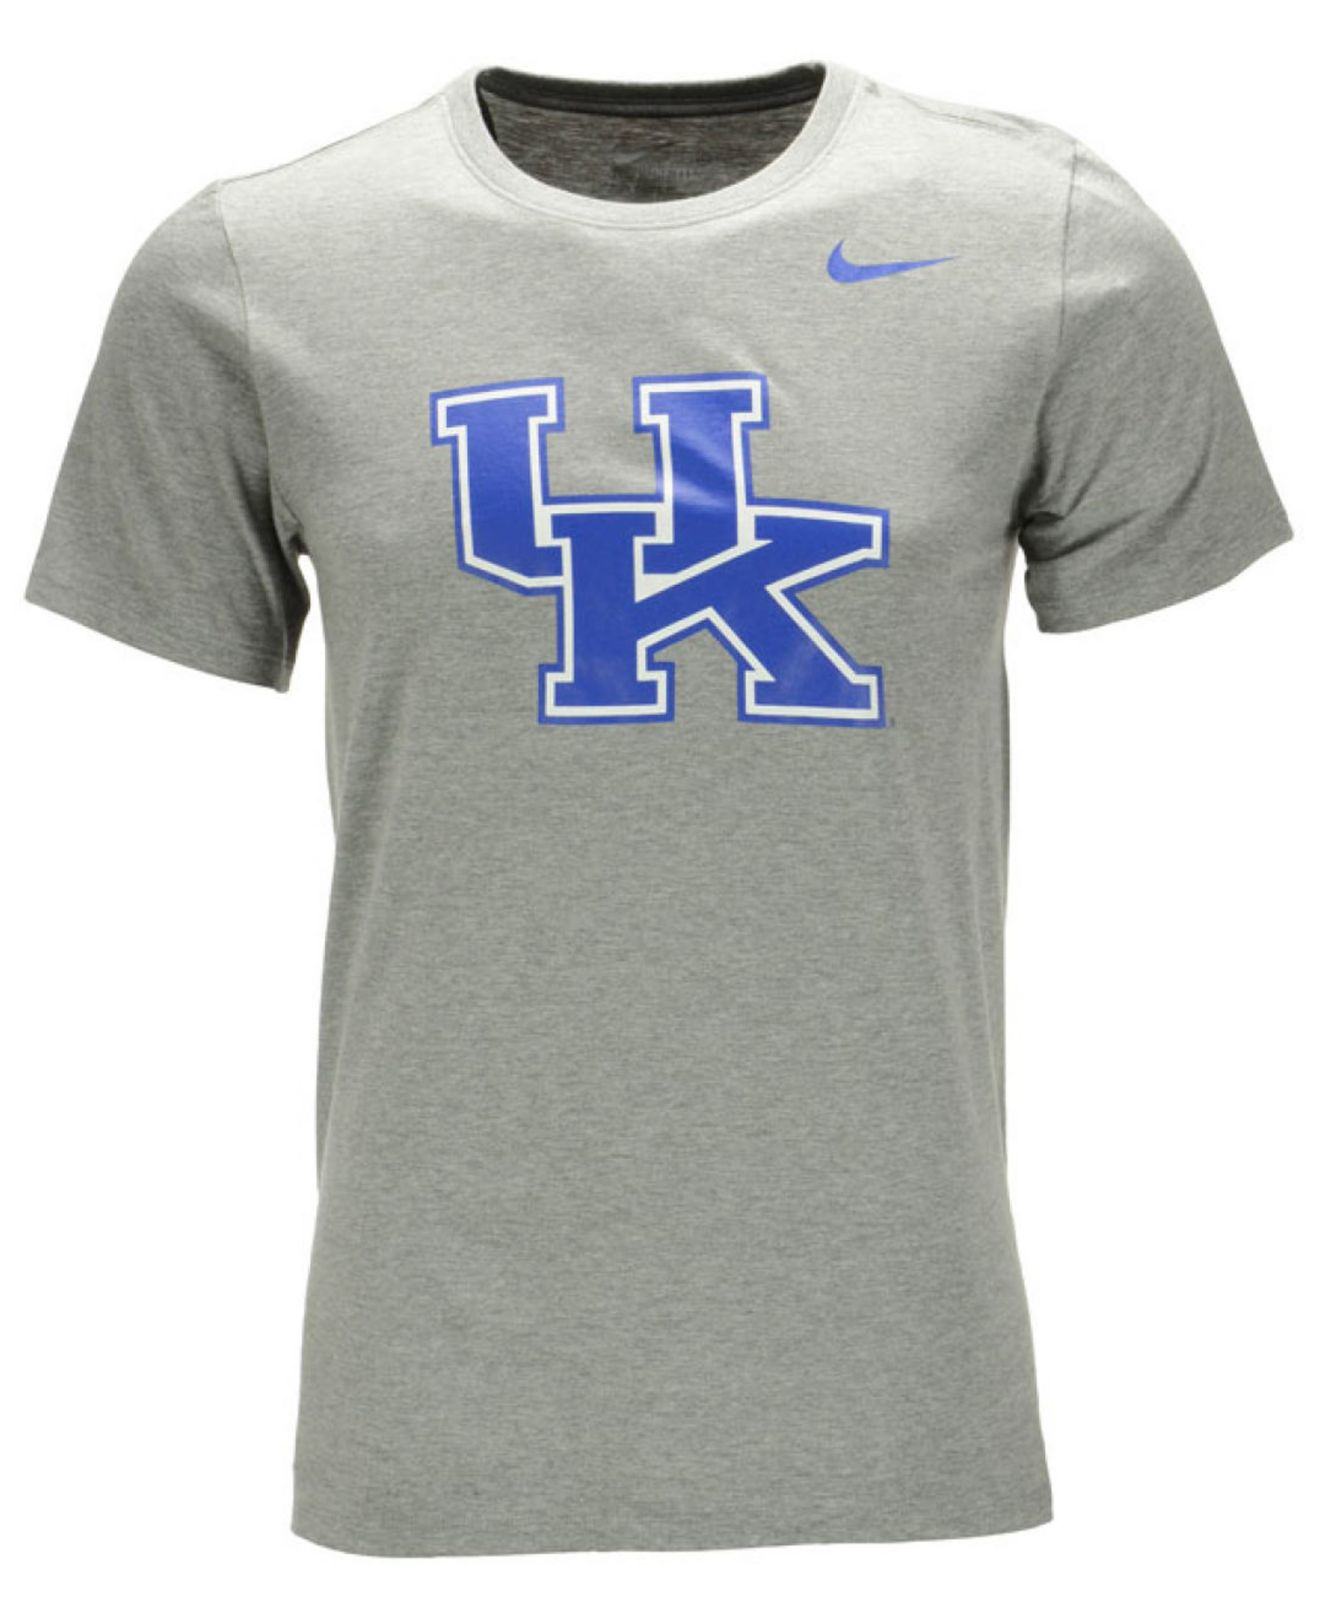 Lyst - Nike Men's Kentucky Wildcats Logo T-shirt in Gray for Men